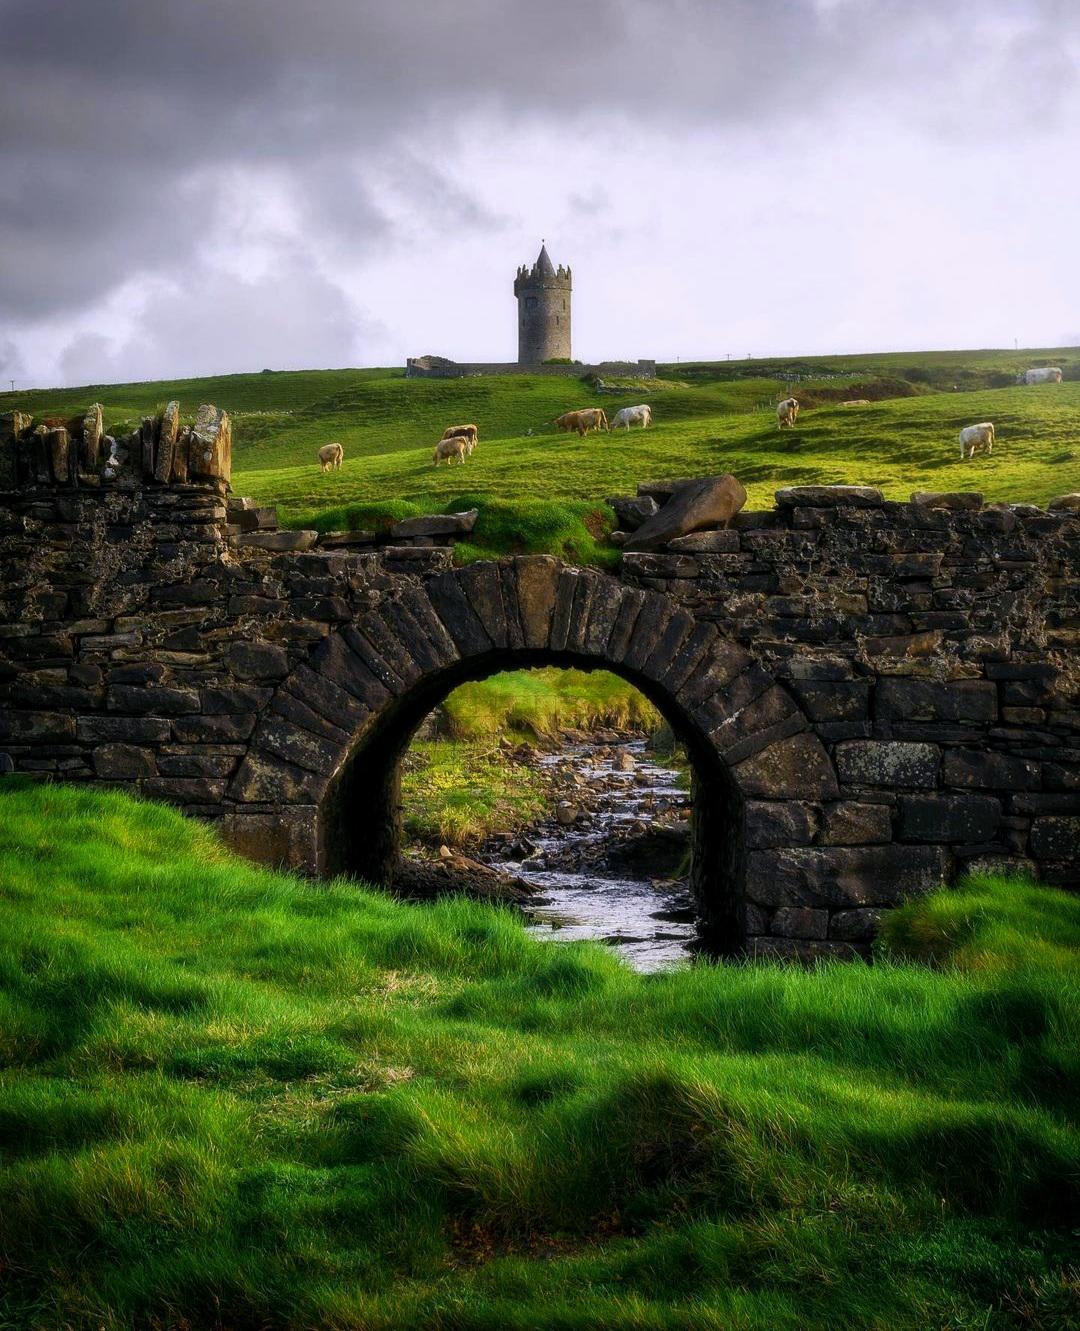 The 16th century Doonagore Castle in Clare, Ireland